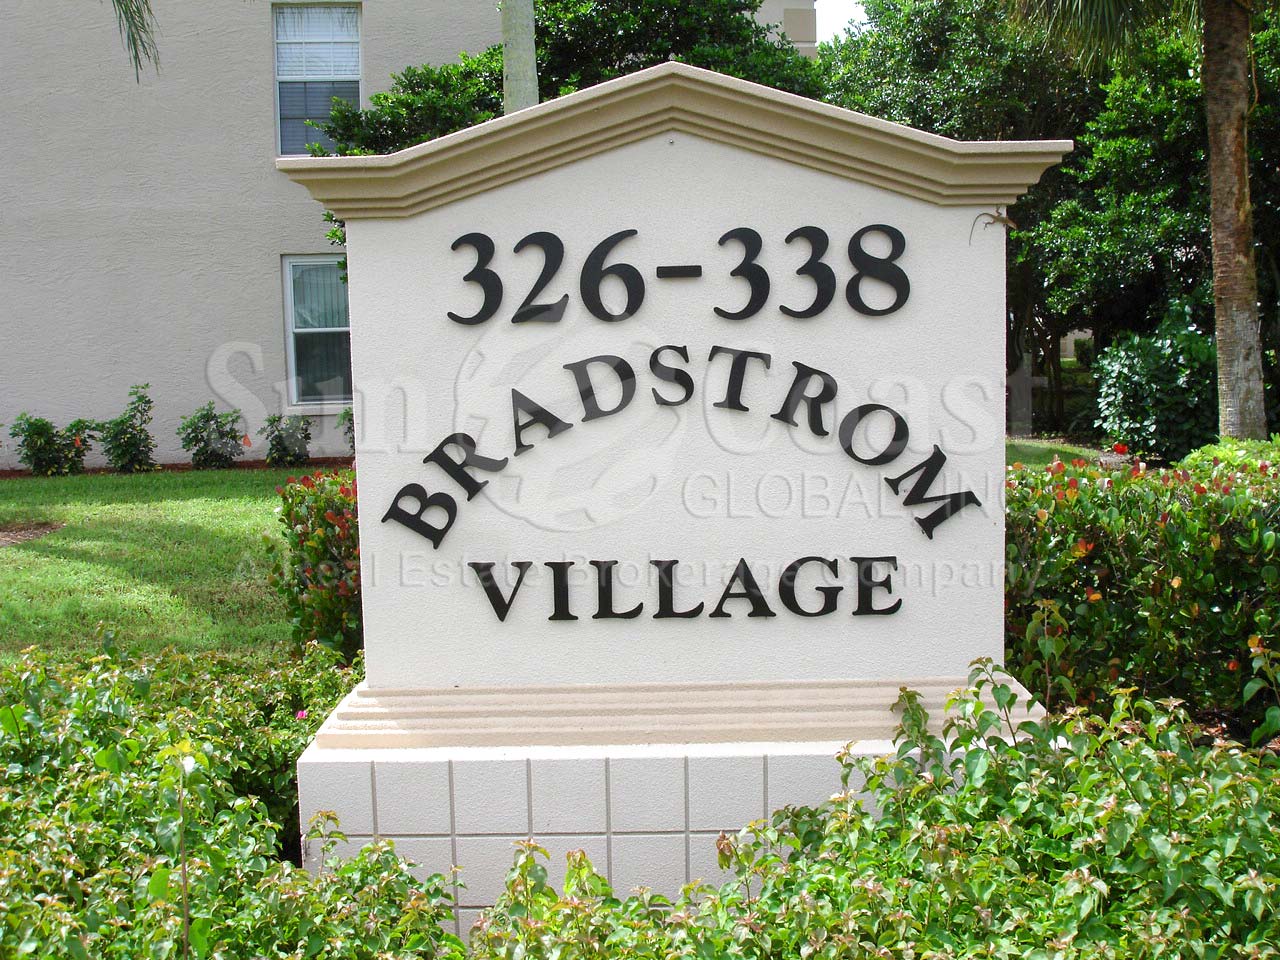 Bradstrom Village Signage